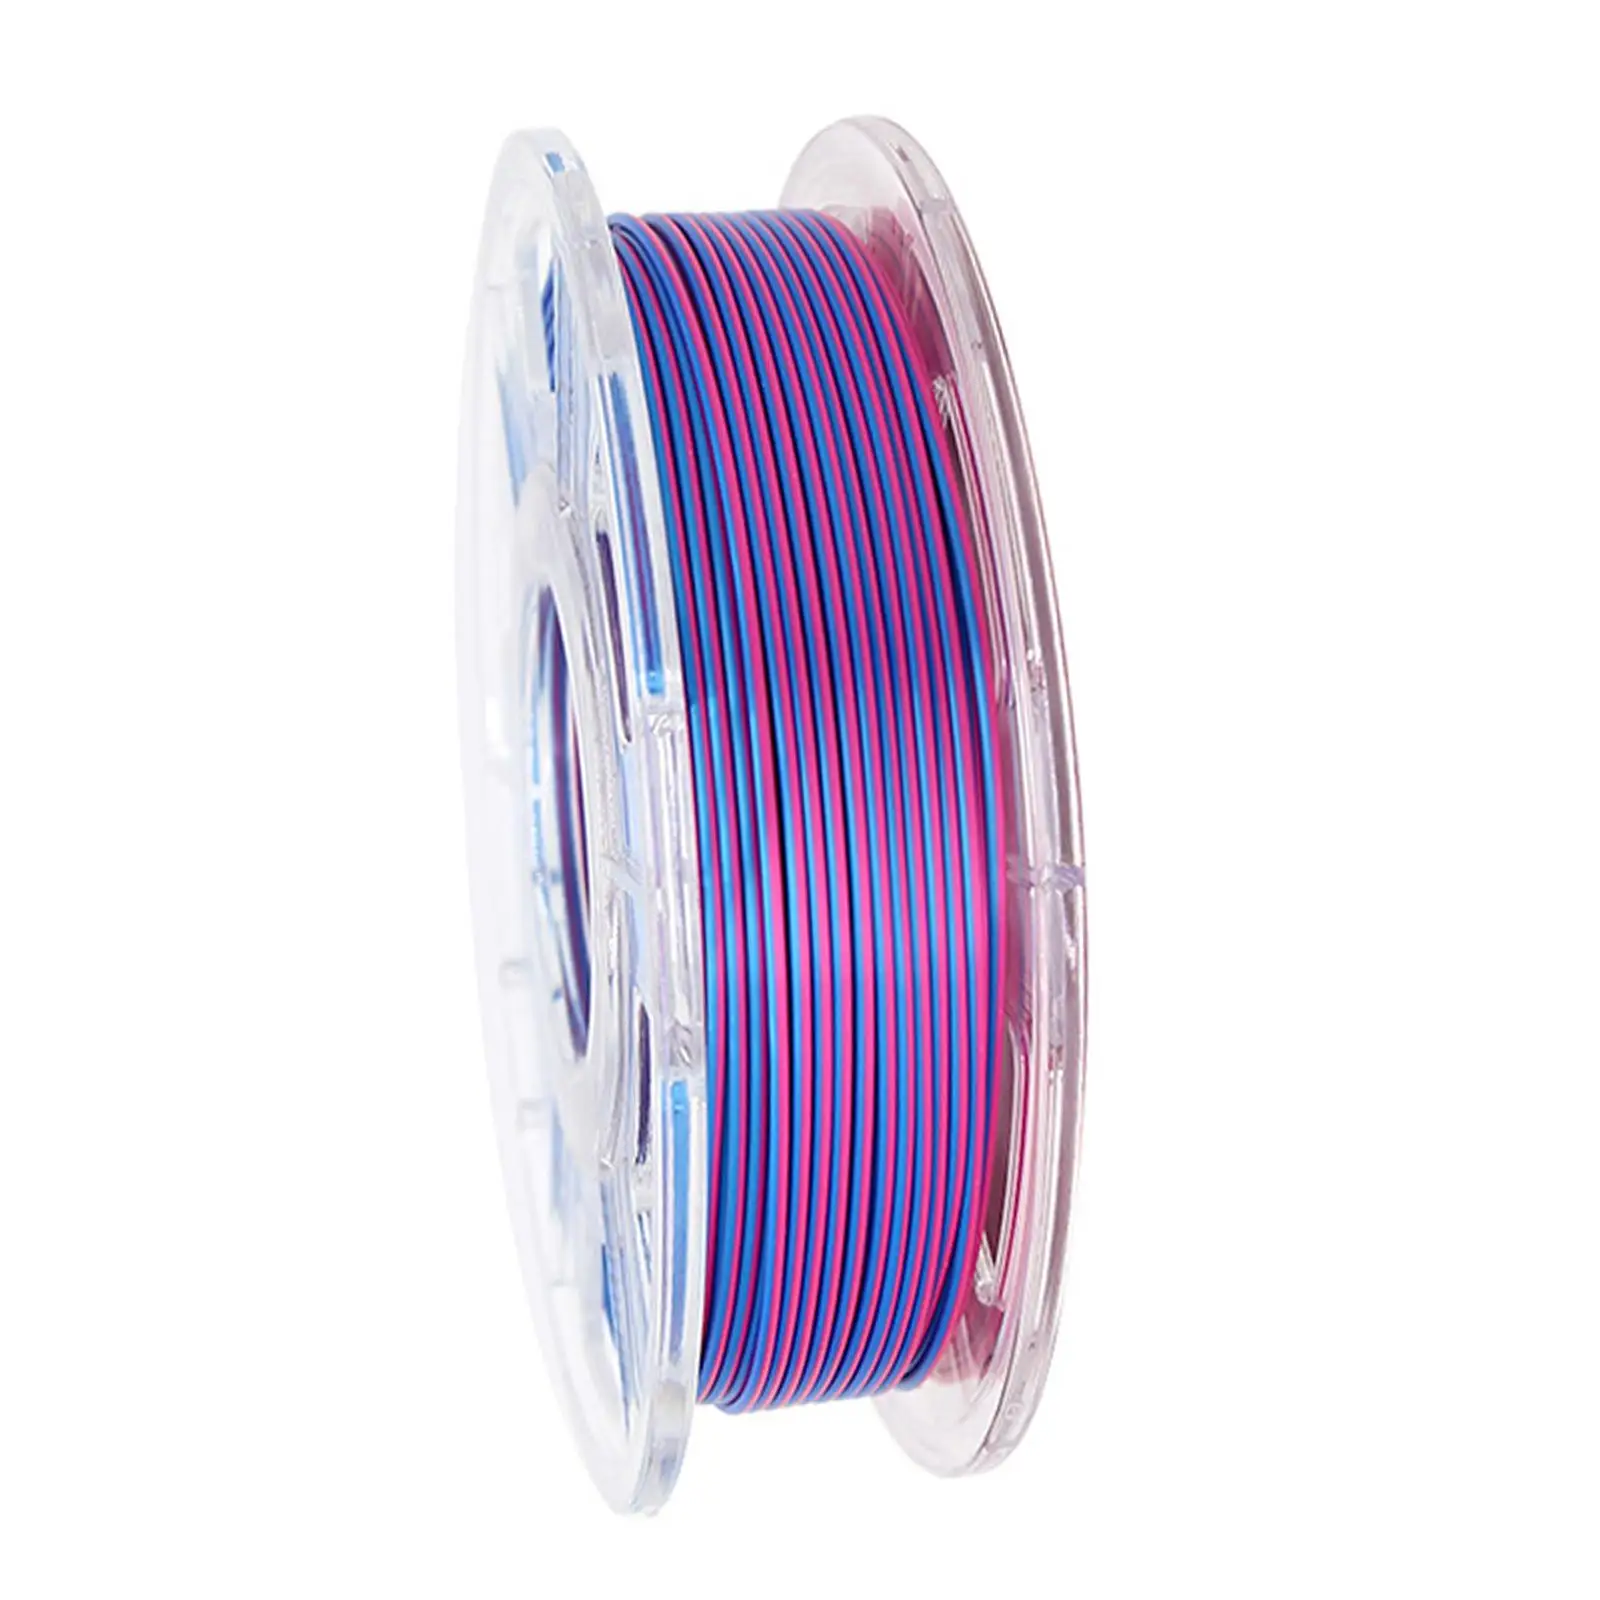 3D Printer Filament Spool Matte Dual Color Series Filament 1kg Silk Pla Filament for DIY Artwork Printing 3D